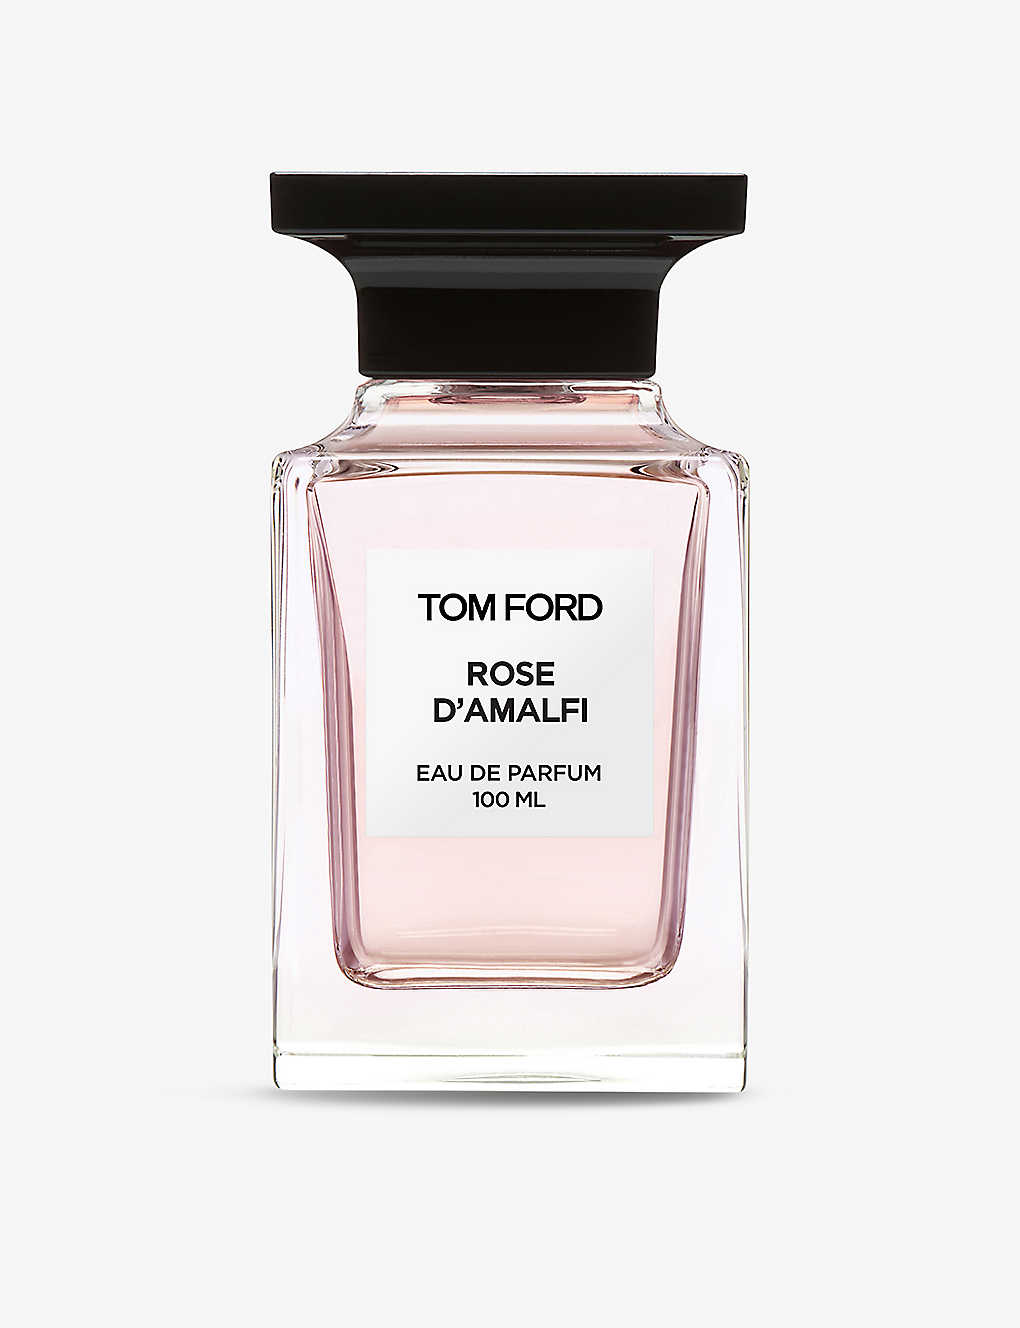 Tom Ford Rose D'amalfi Eau De Parfum